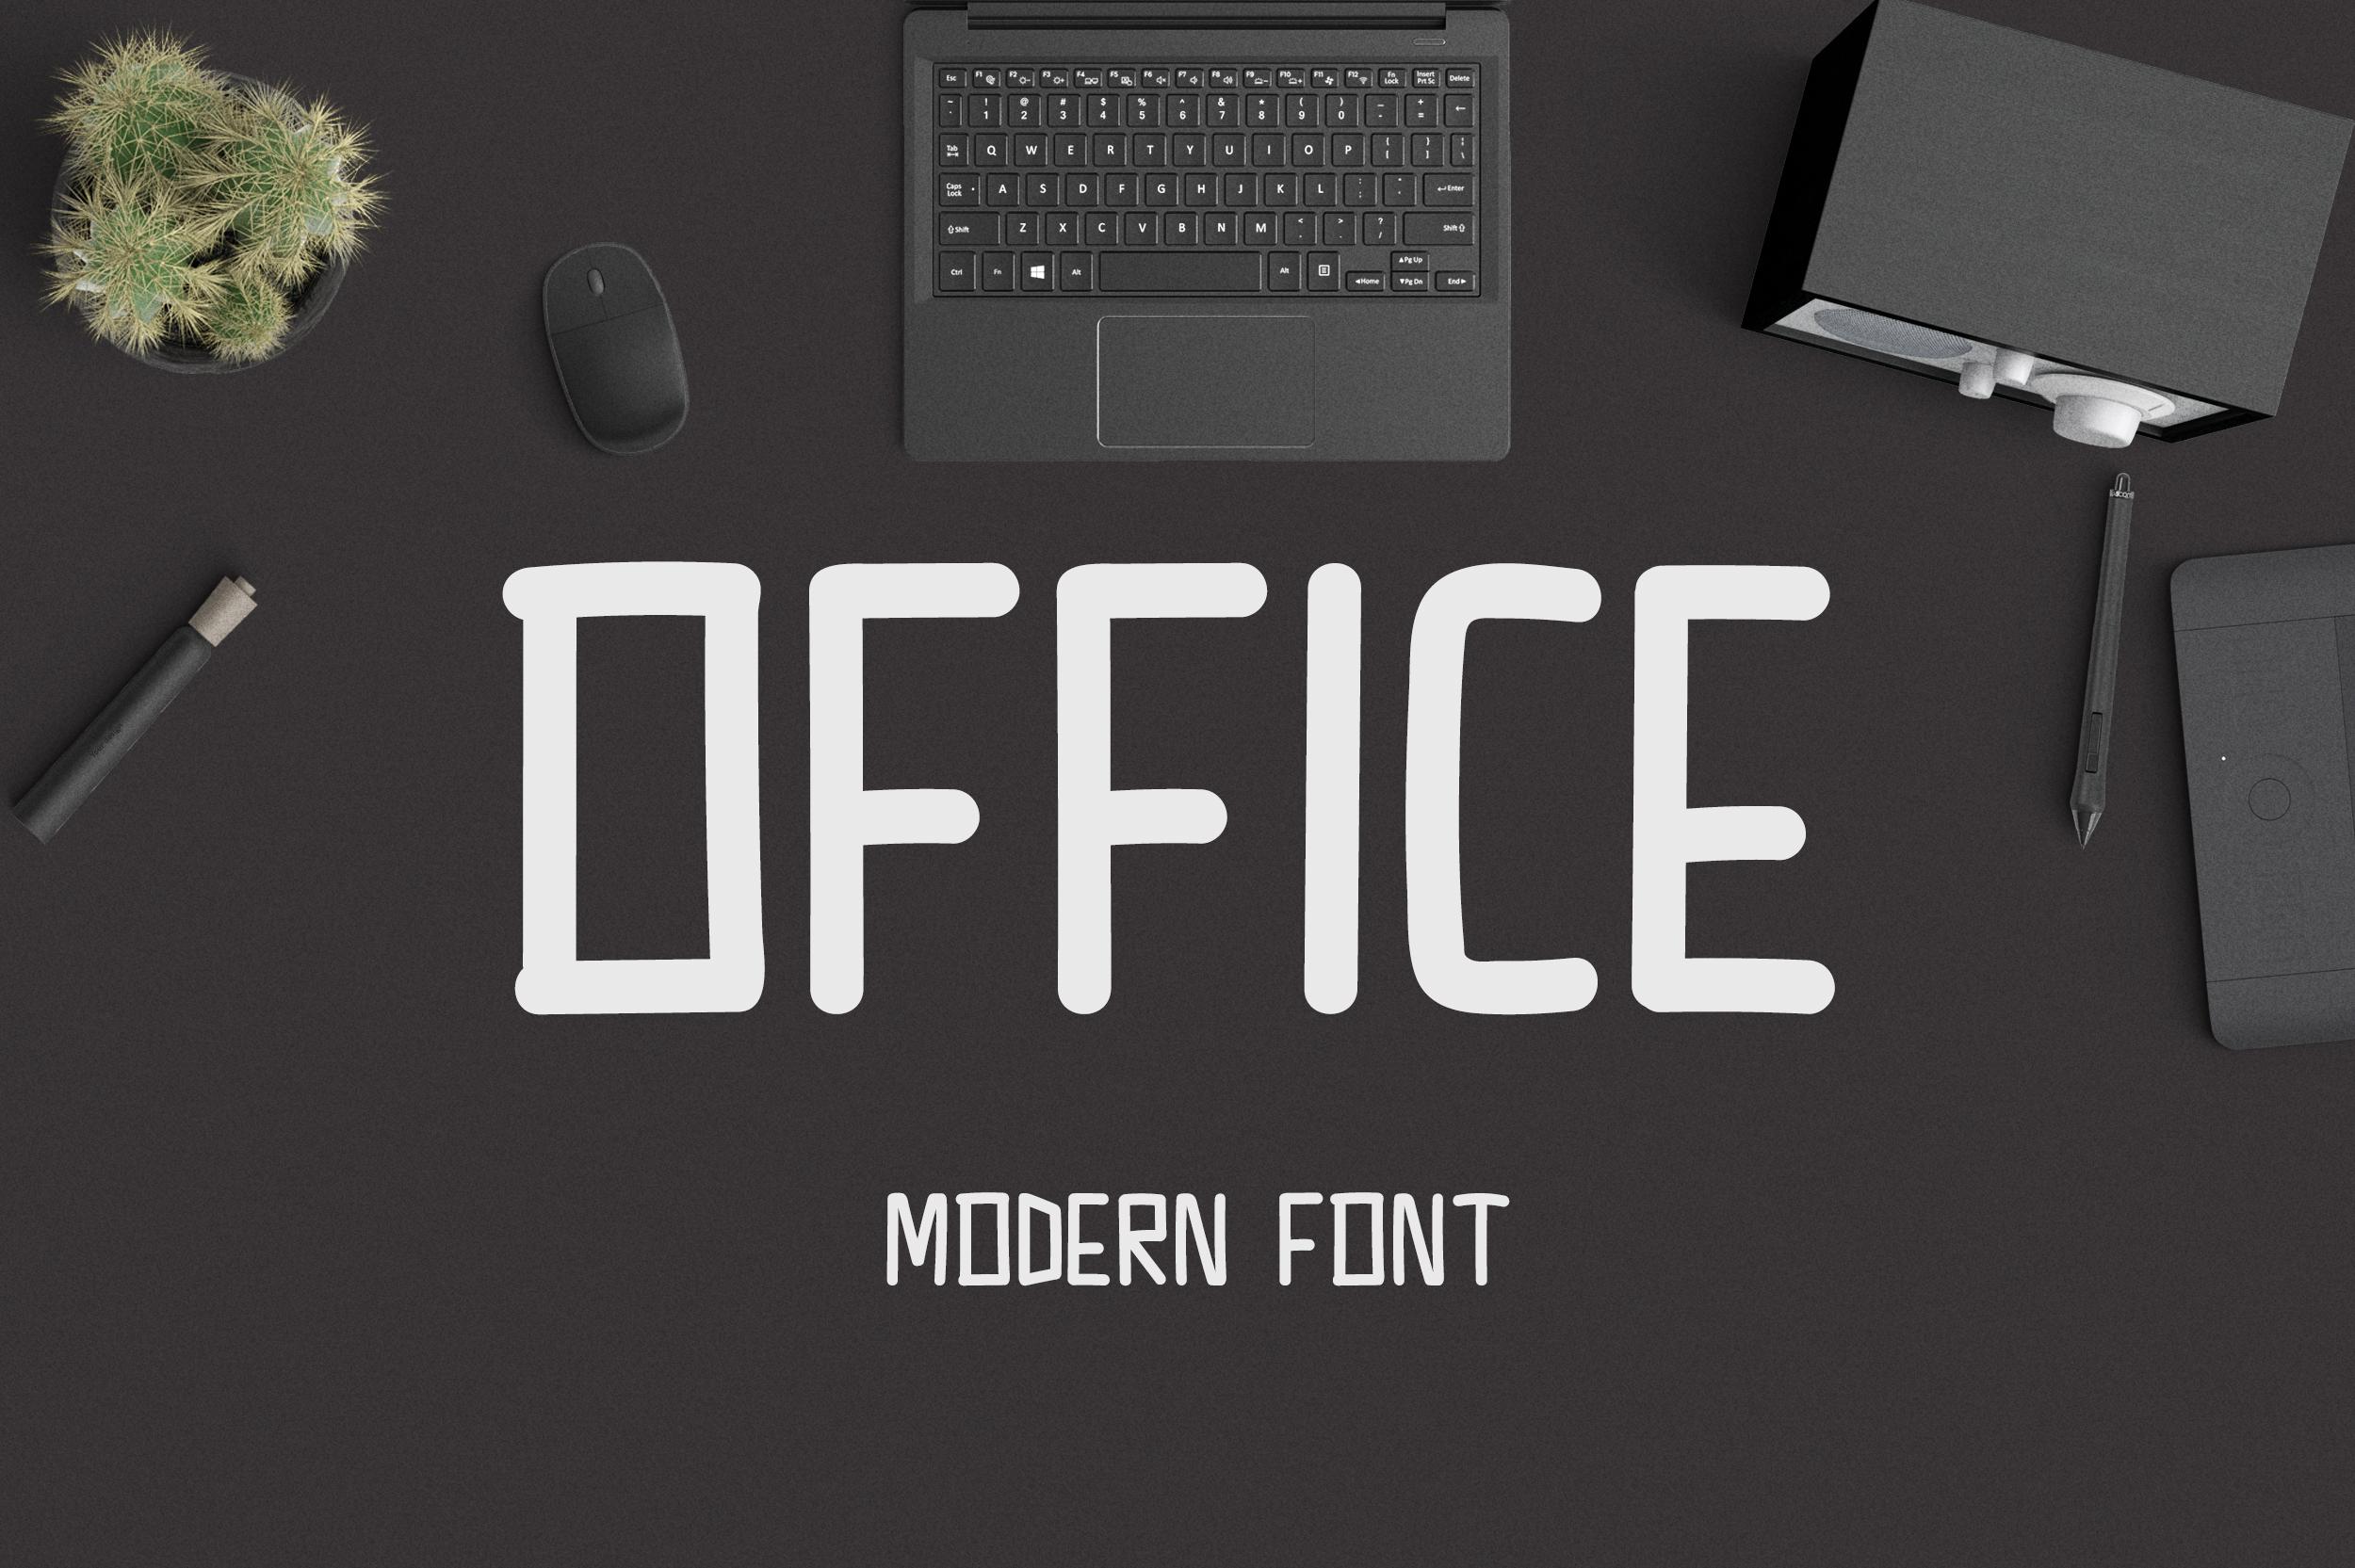 Office Font